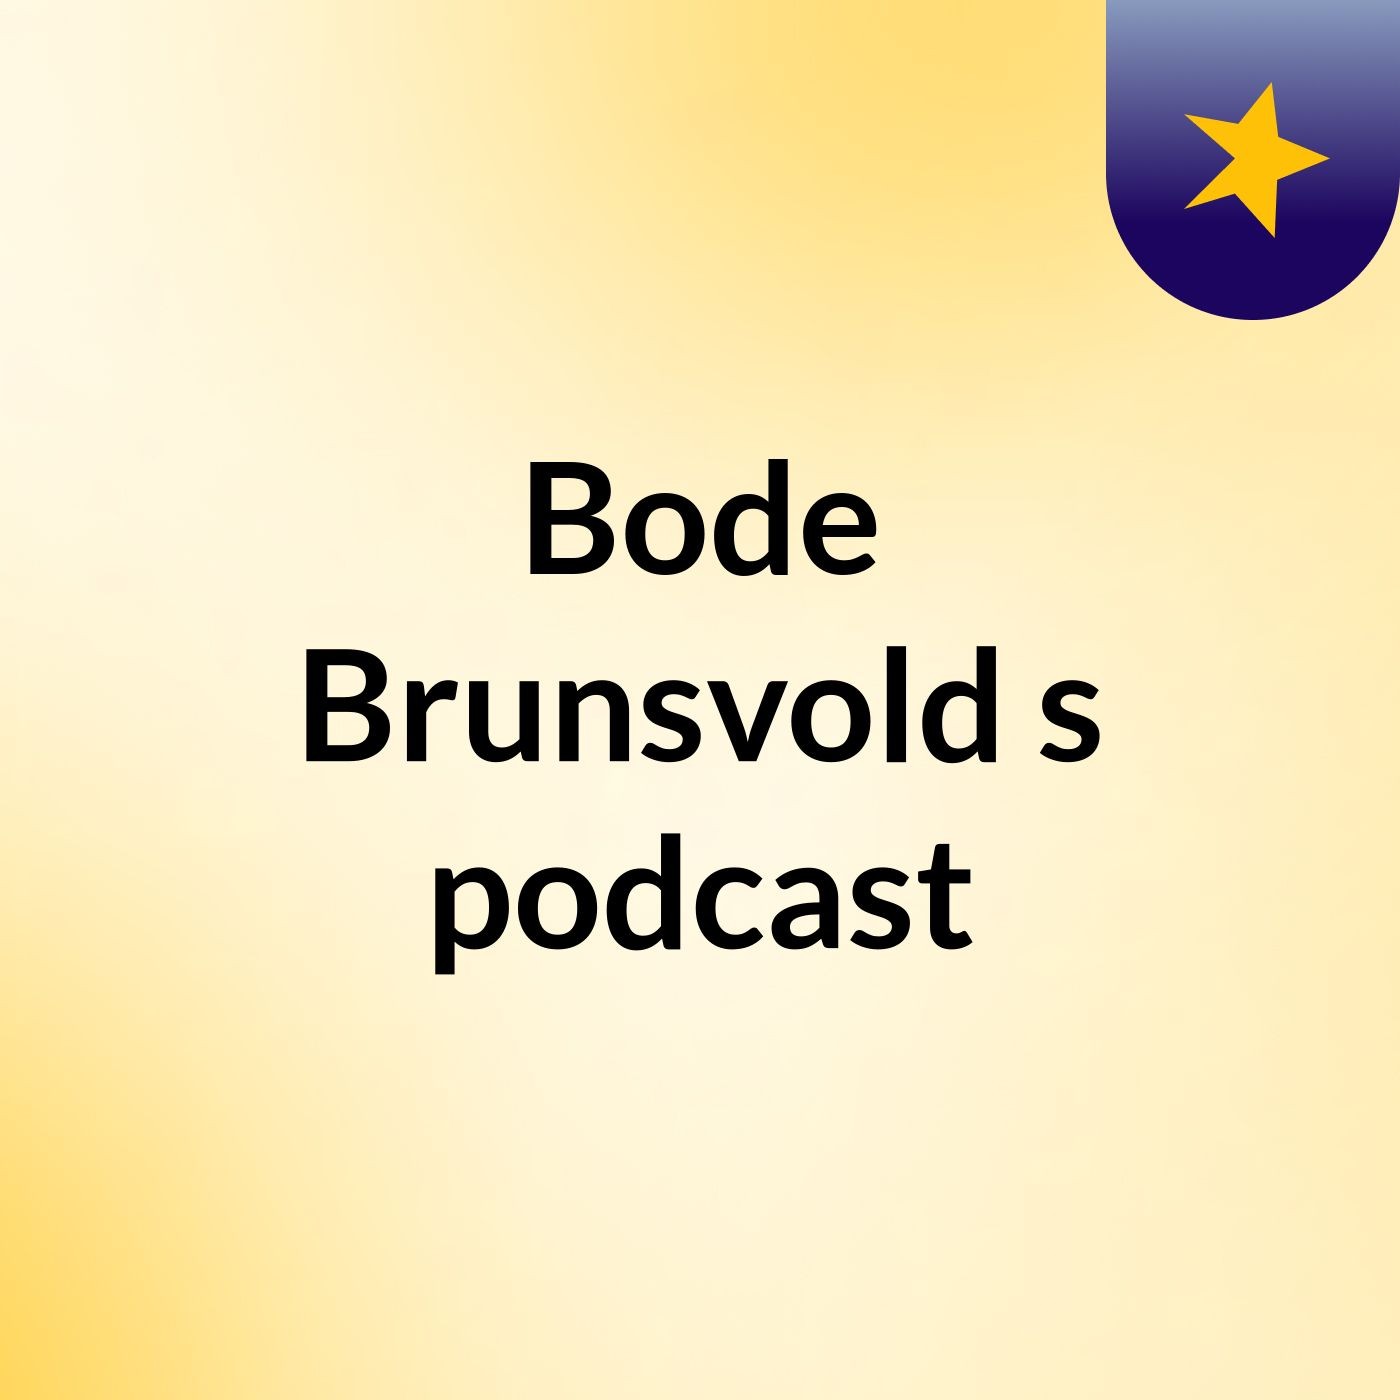 Bode Brunsvold's podcast